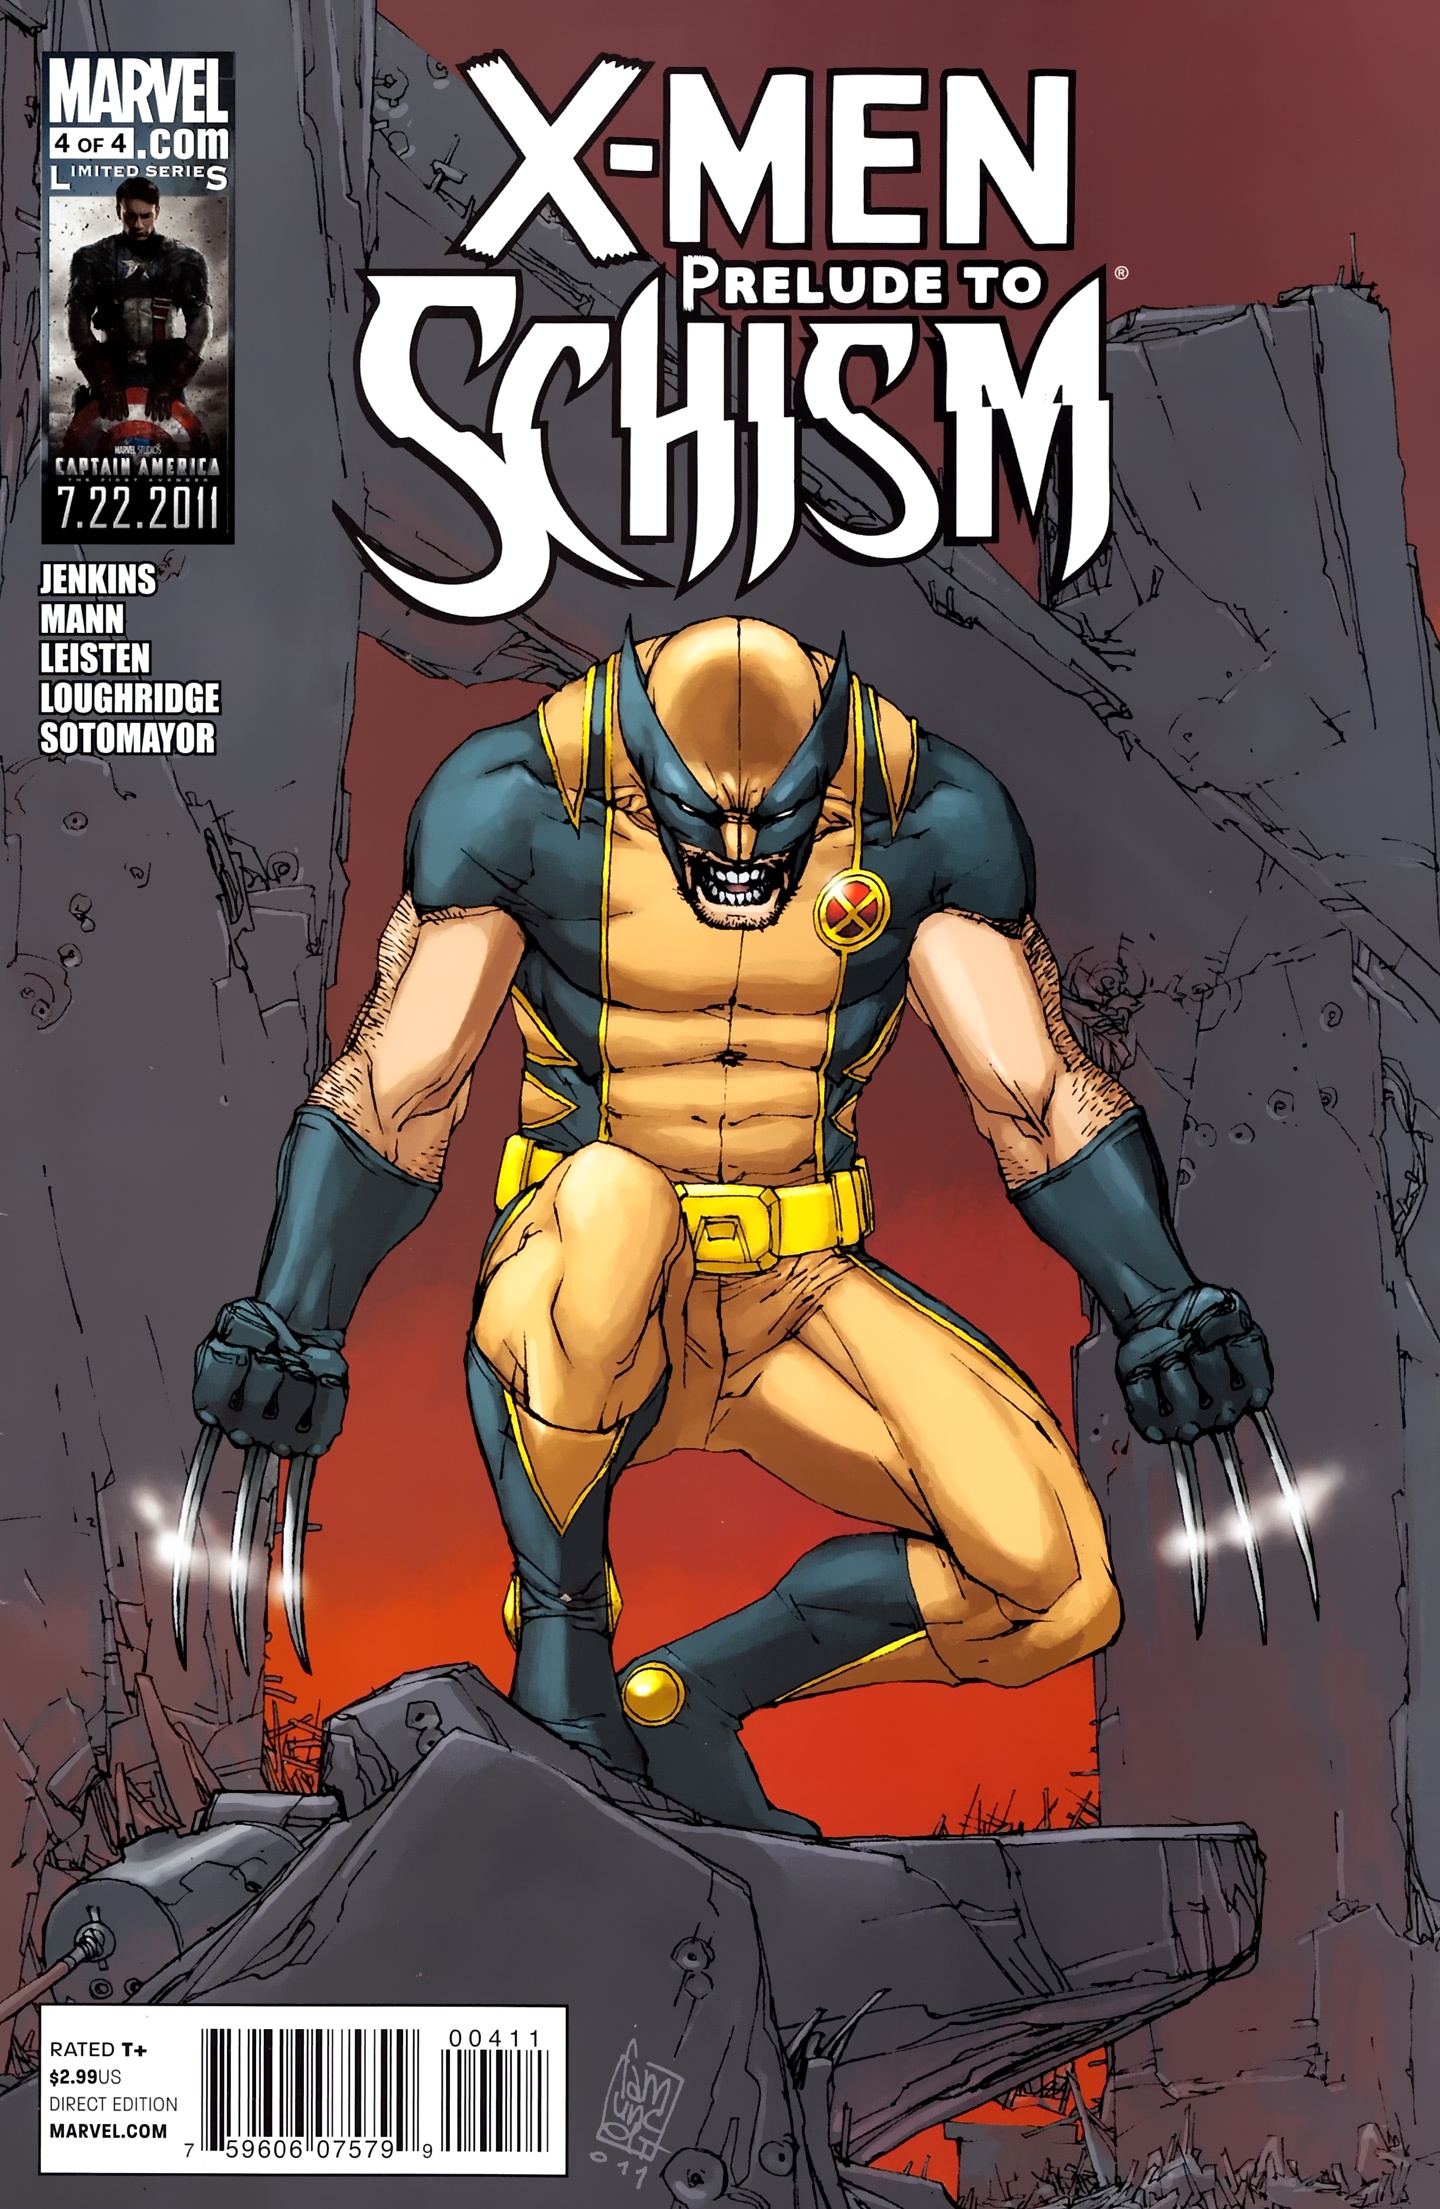 Read online X-Men: Prelude To Schism comic - Issue #4 - 1. Online read...